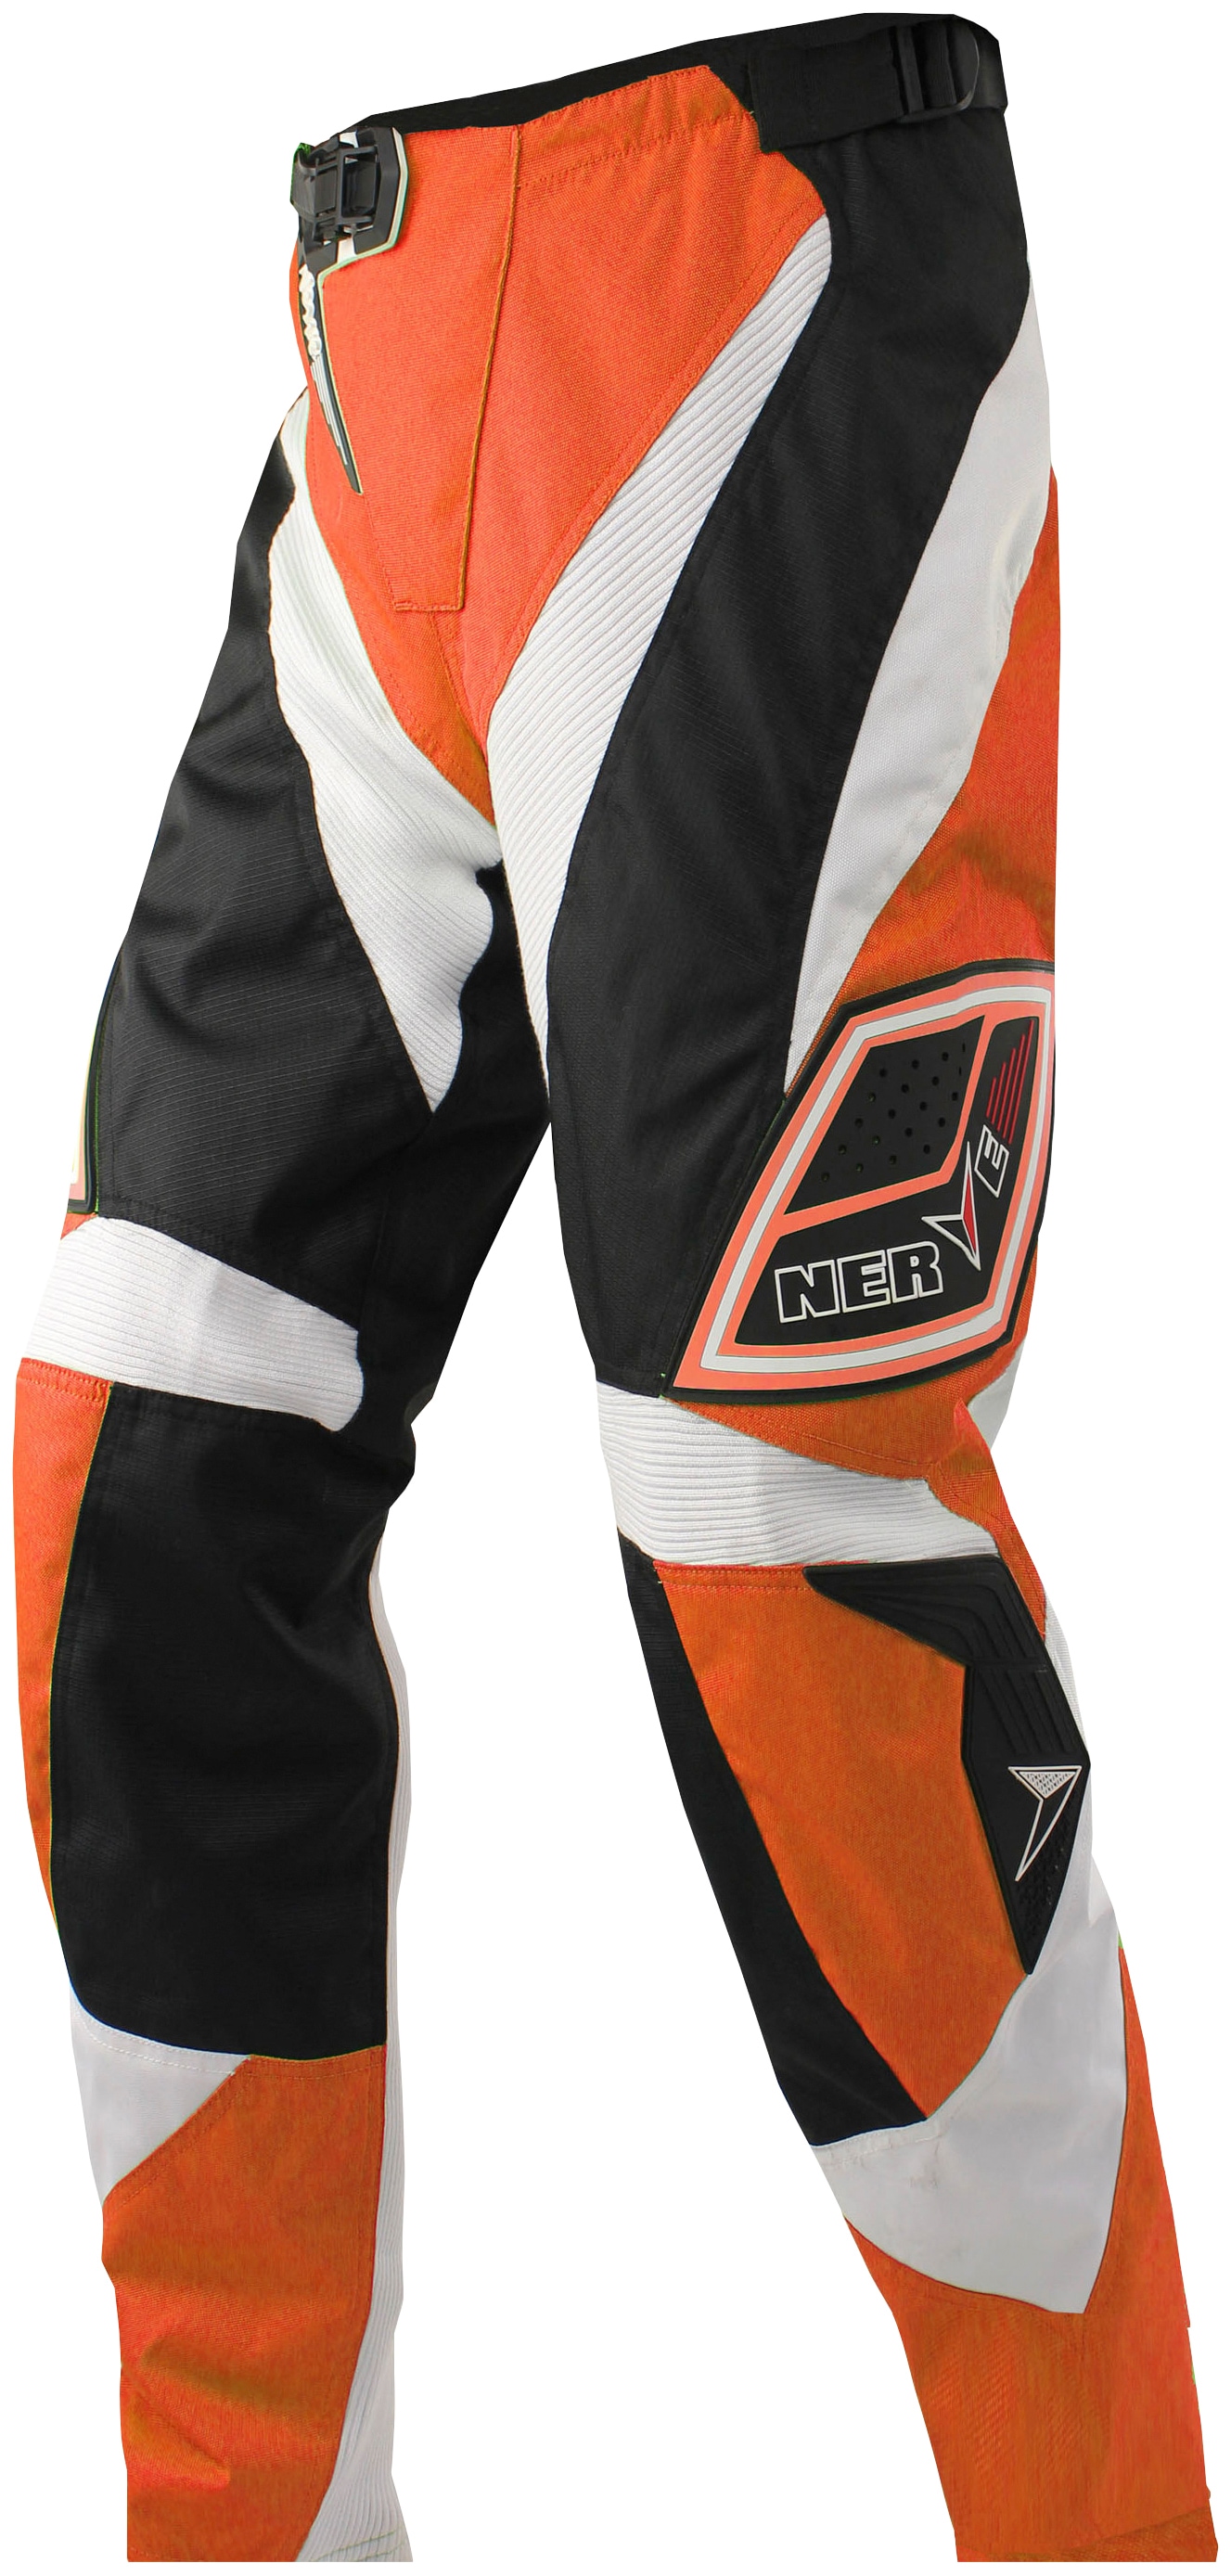 NERVE Motorradhose »Nerve Motocross«